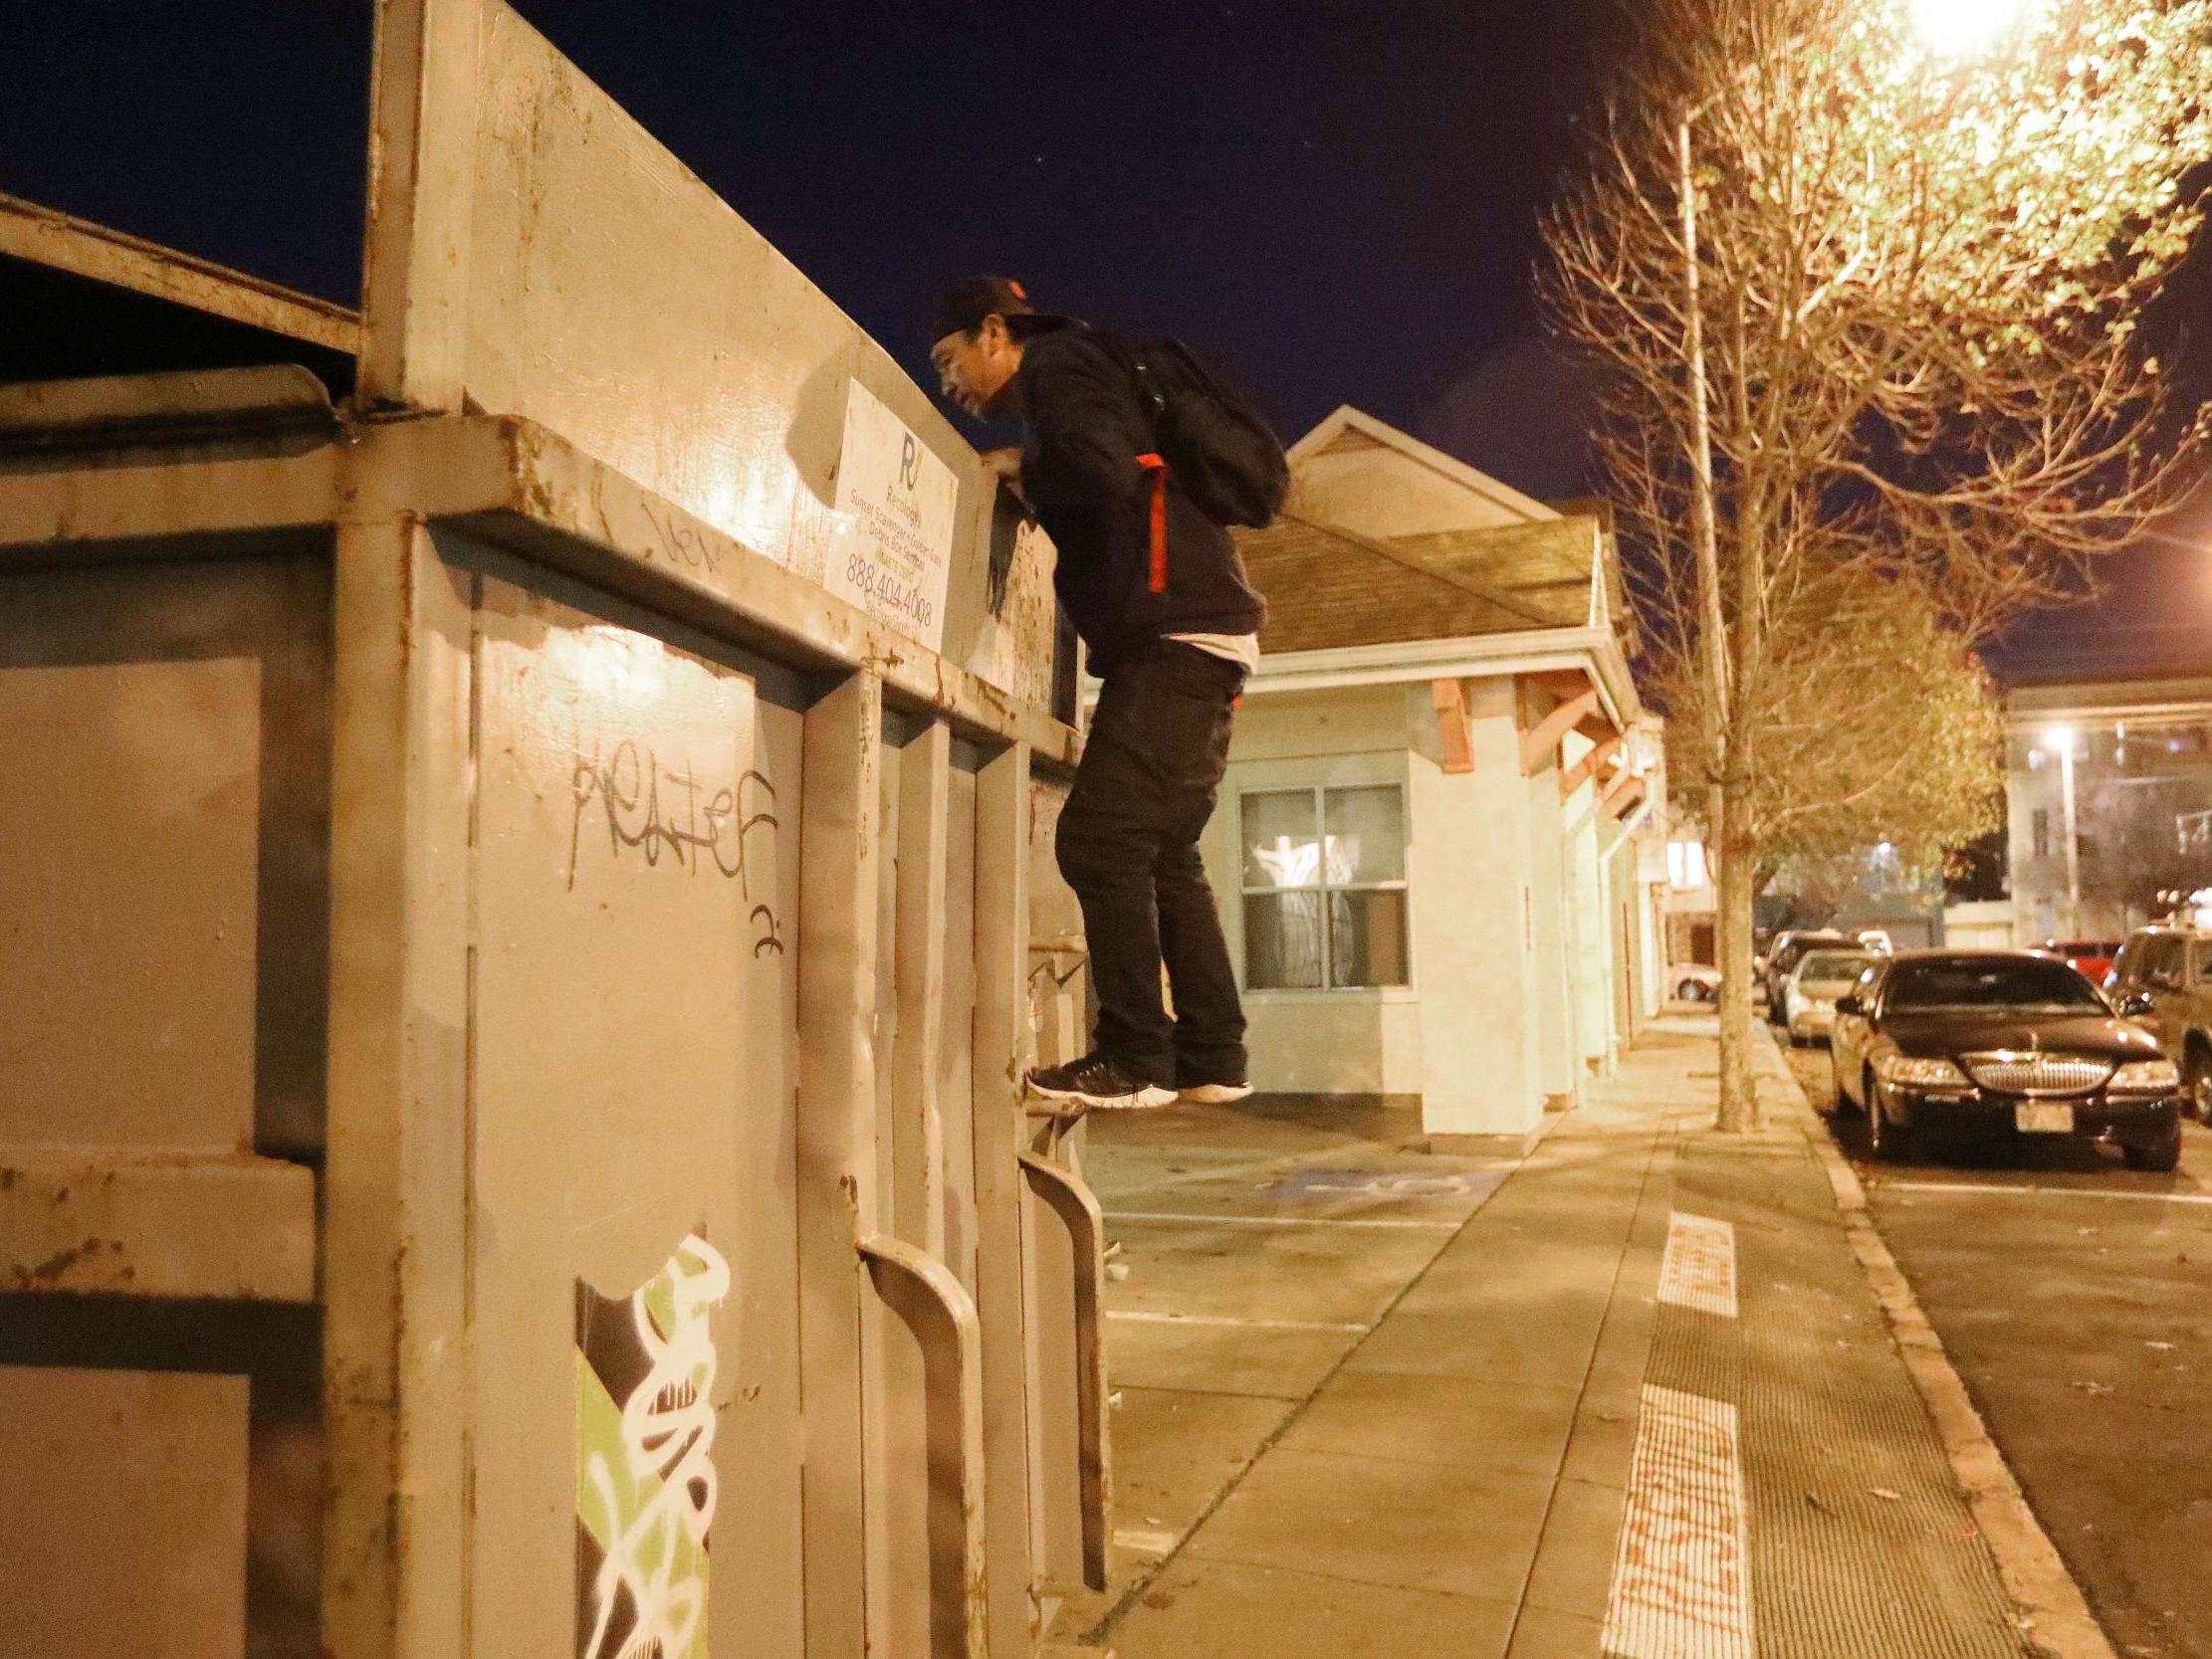 Jake Orta peers into a dumpster in San Francisco on 25 Jan, 2019